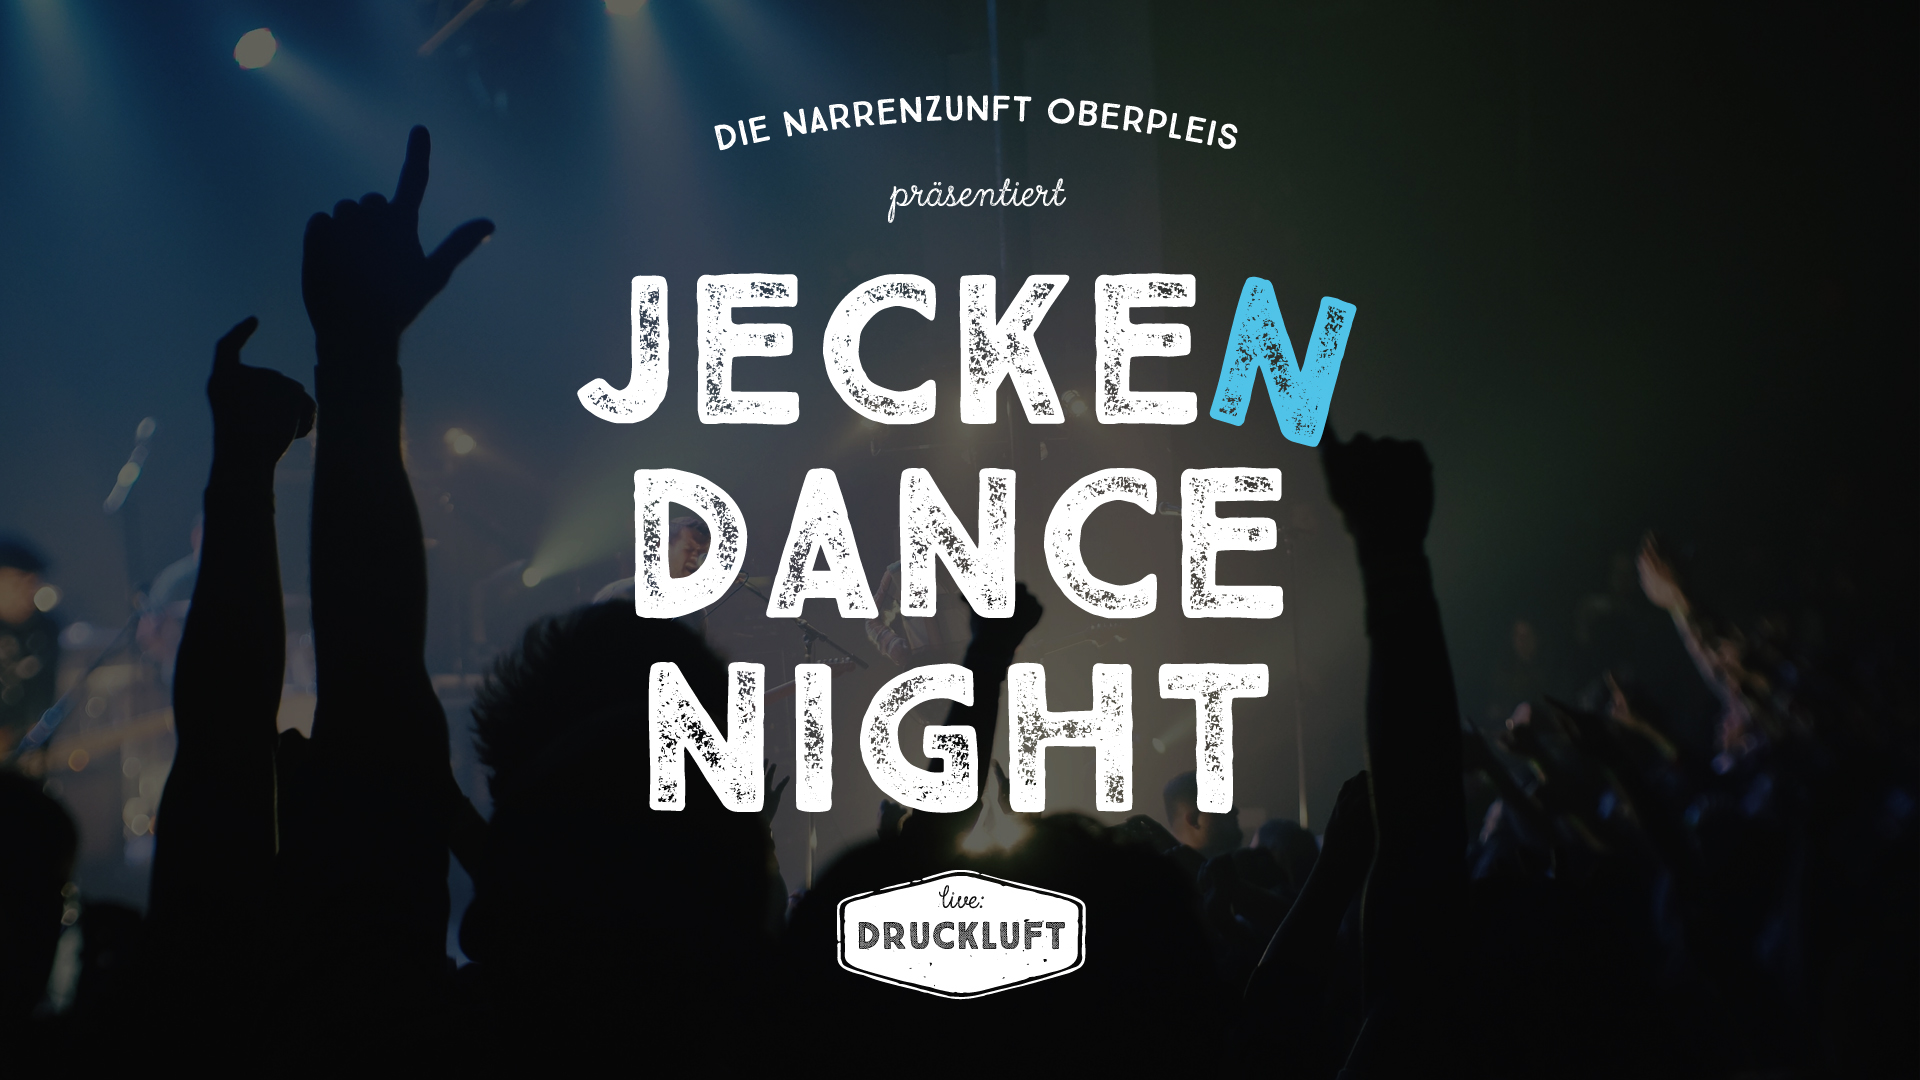 Jecke(n) Dance Night 2016